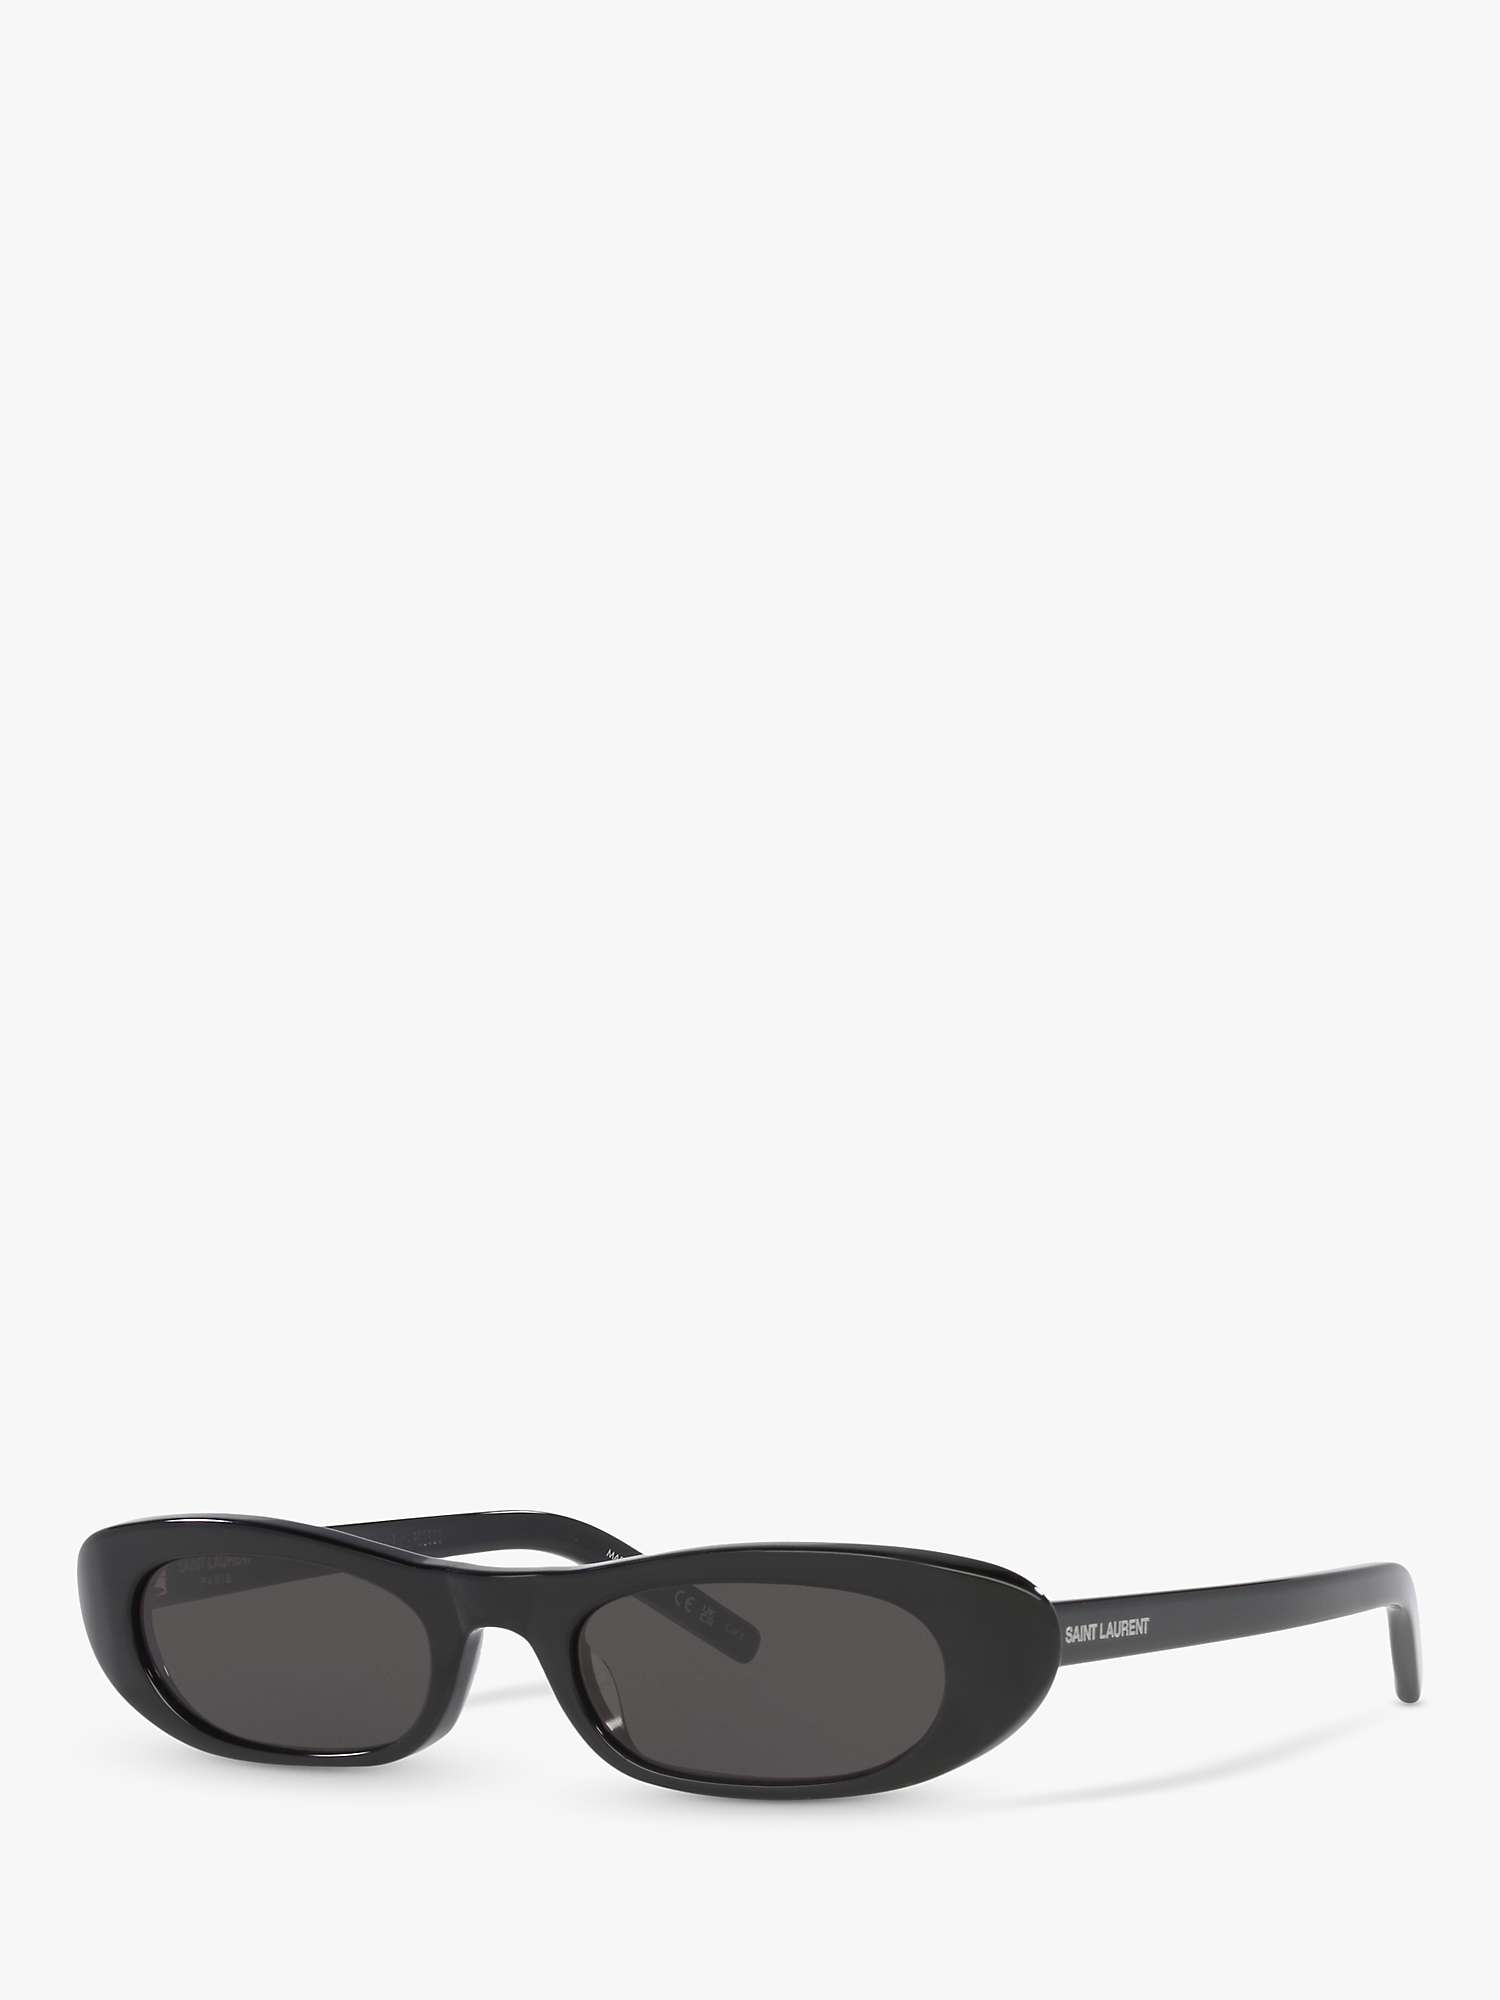 Buy Yves Saint Laurent YS000414 Women's Oval Sunglasses, Black/Grey Online at johnlewis.com